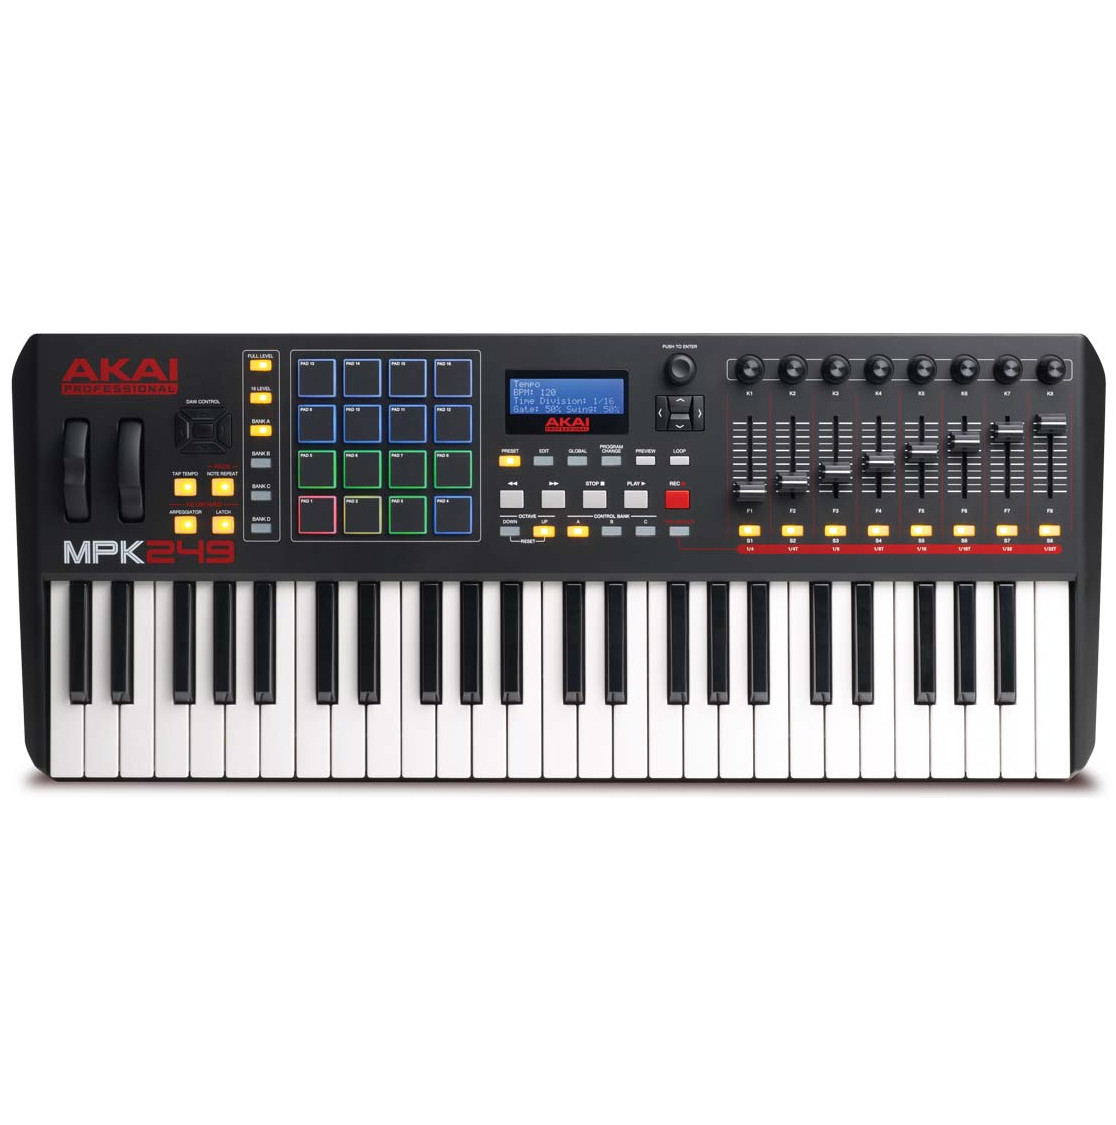 Akai MPK249 MIDI Controller